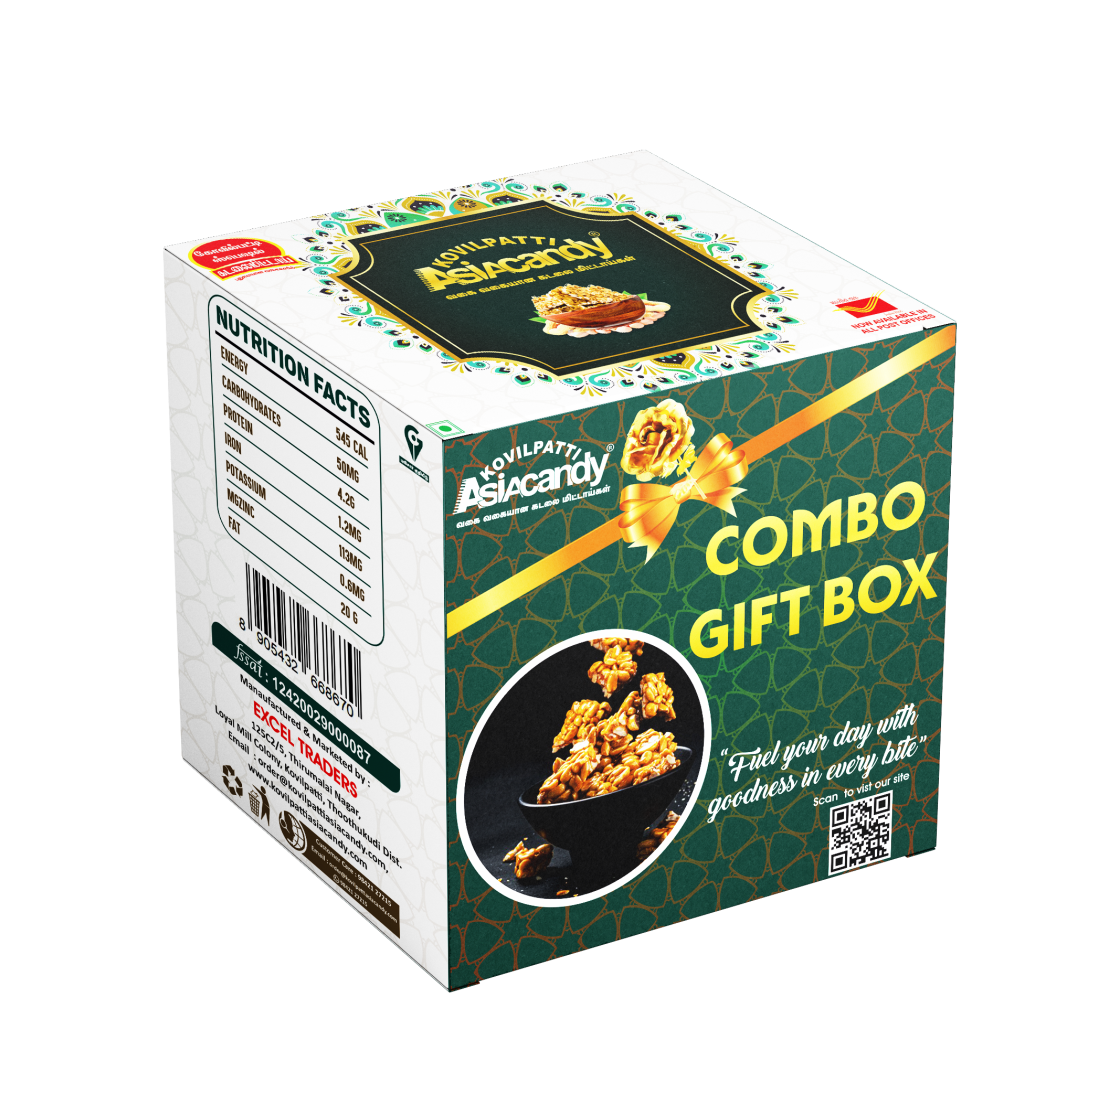 COMBO GIFT BOX